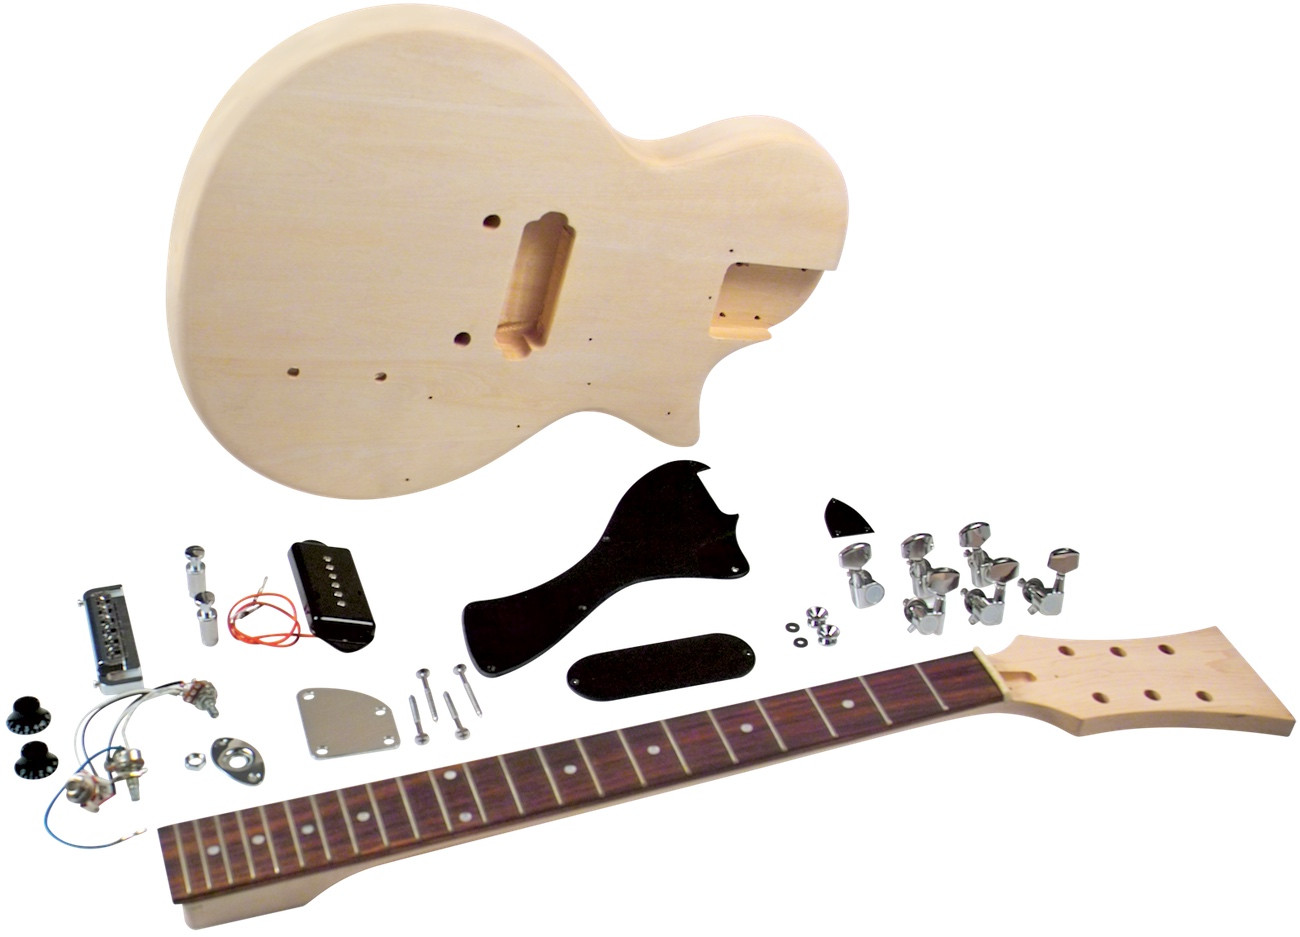 DIY Guitar Kit Review
 The Best DIY Guitar Kits Electric All Under $250